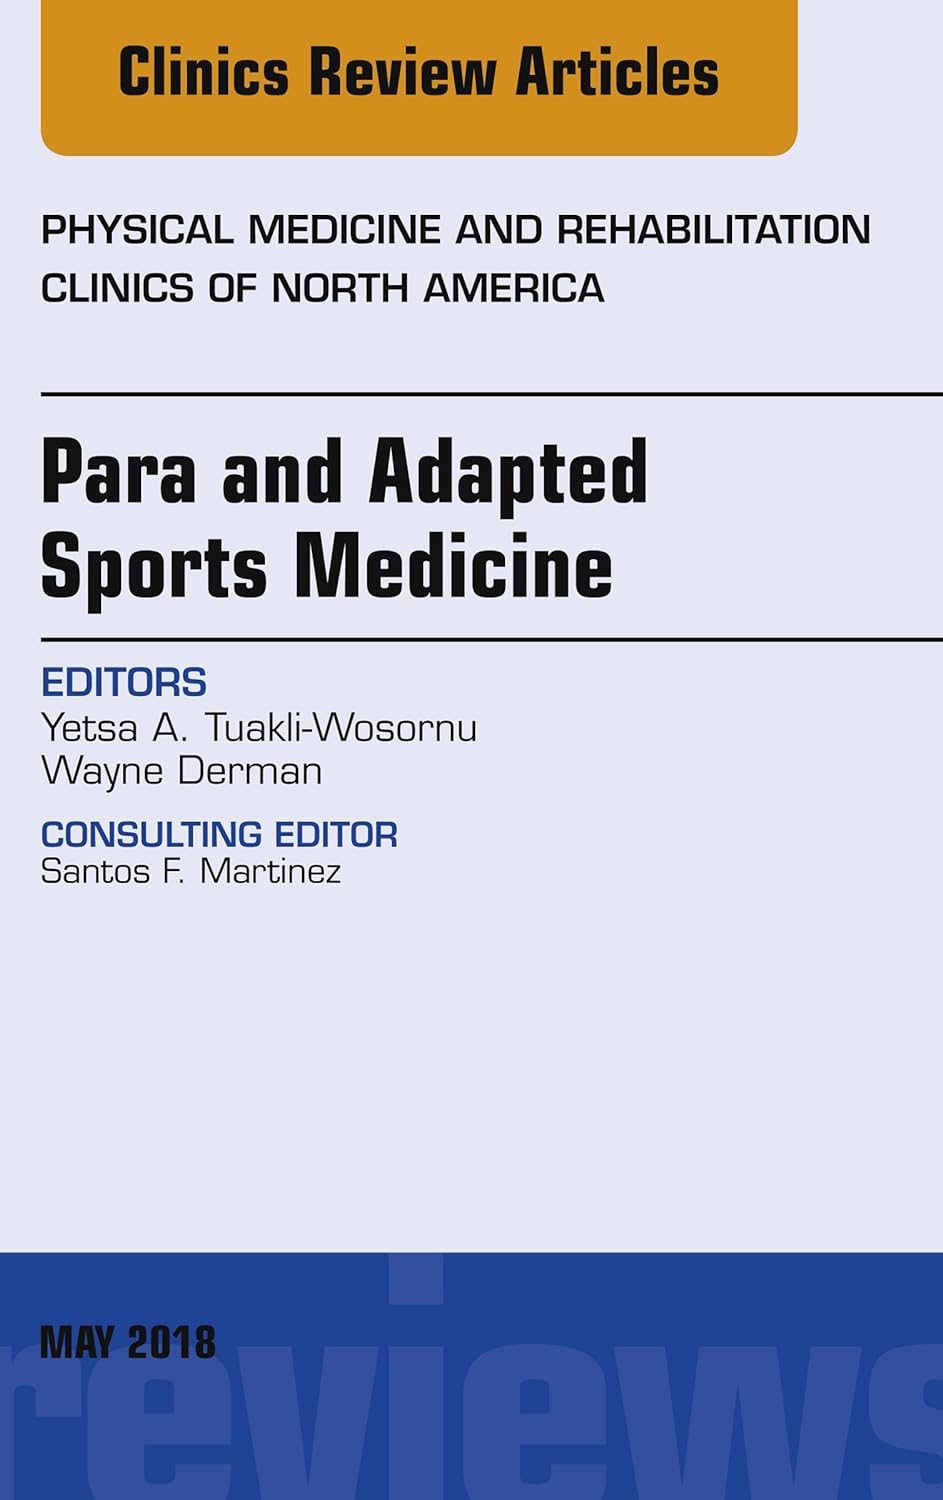 Para and Adapted Sports Medicine, An Issue of Physical Medicine and Rehabilitation Clinics of North America (Volume 29-2) (The Clinics: Orthopedics, Volume 29-2) (Original PDF) by Yetsa A. Tuakli-Wosornu